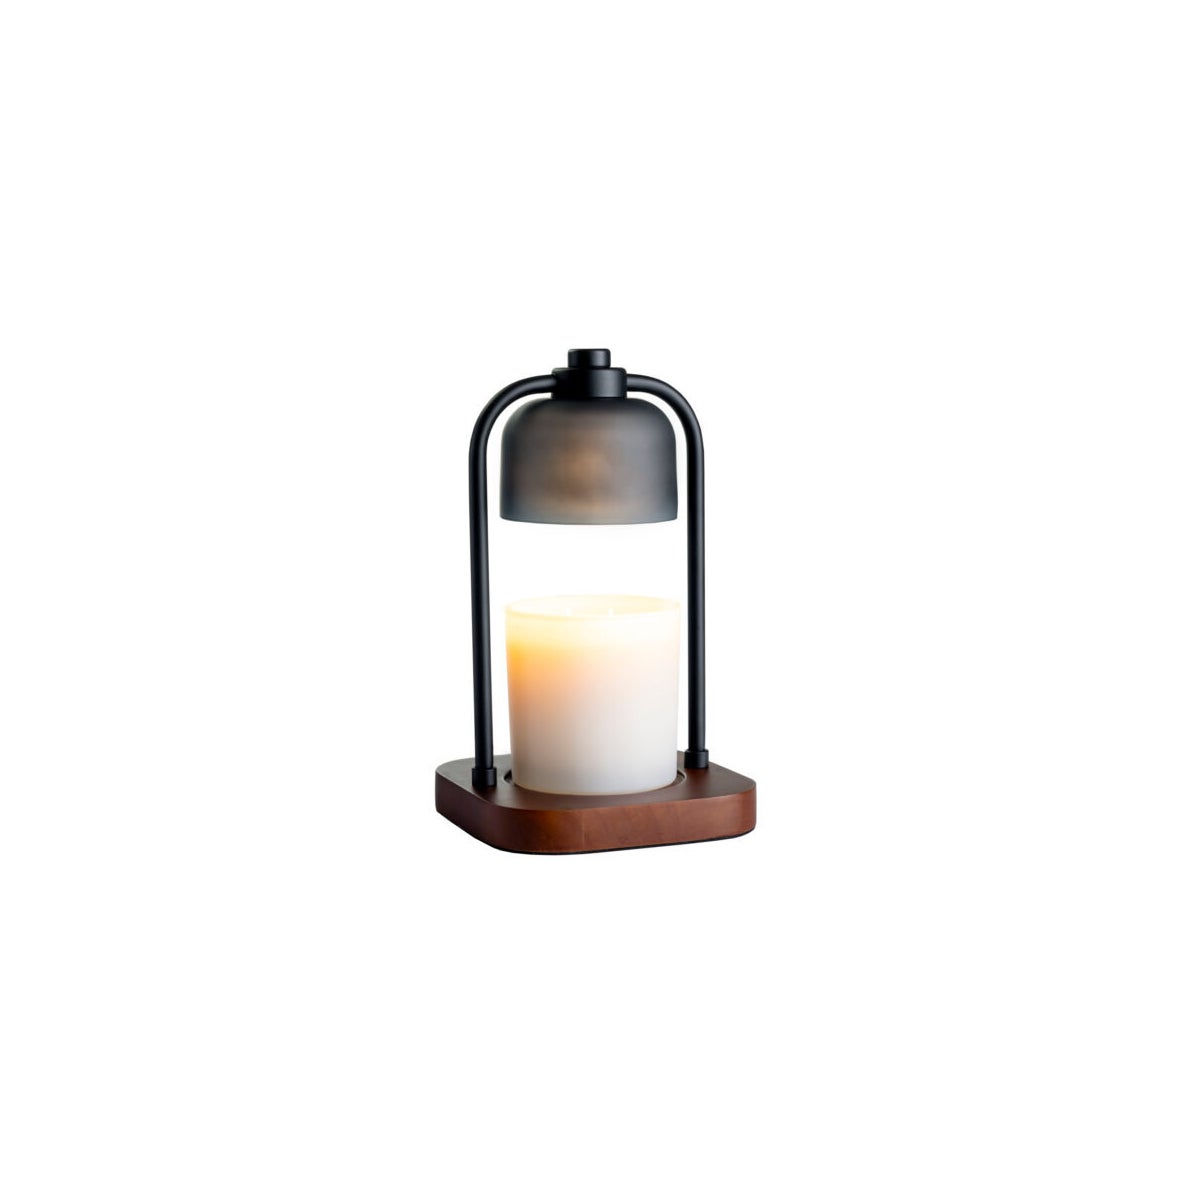 Pendant Lantern Candle Warmer - Black and Wood